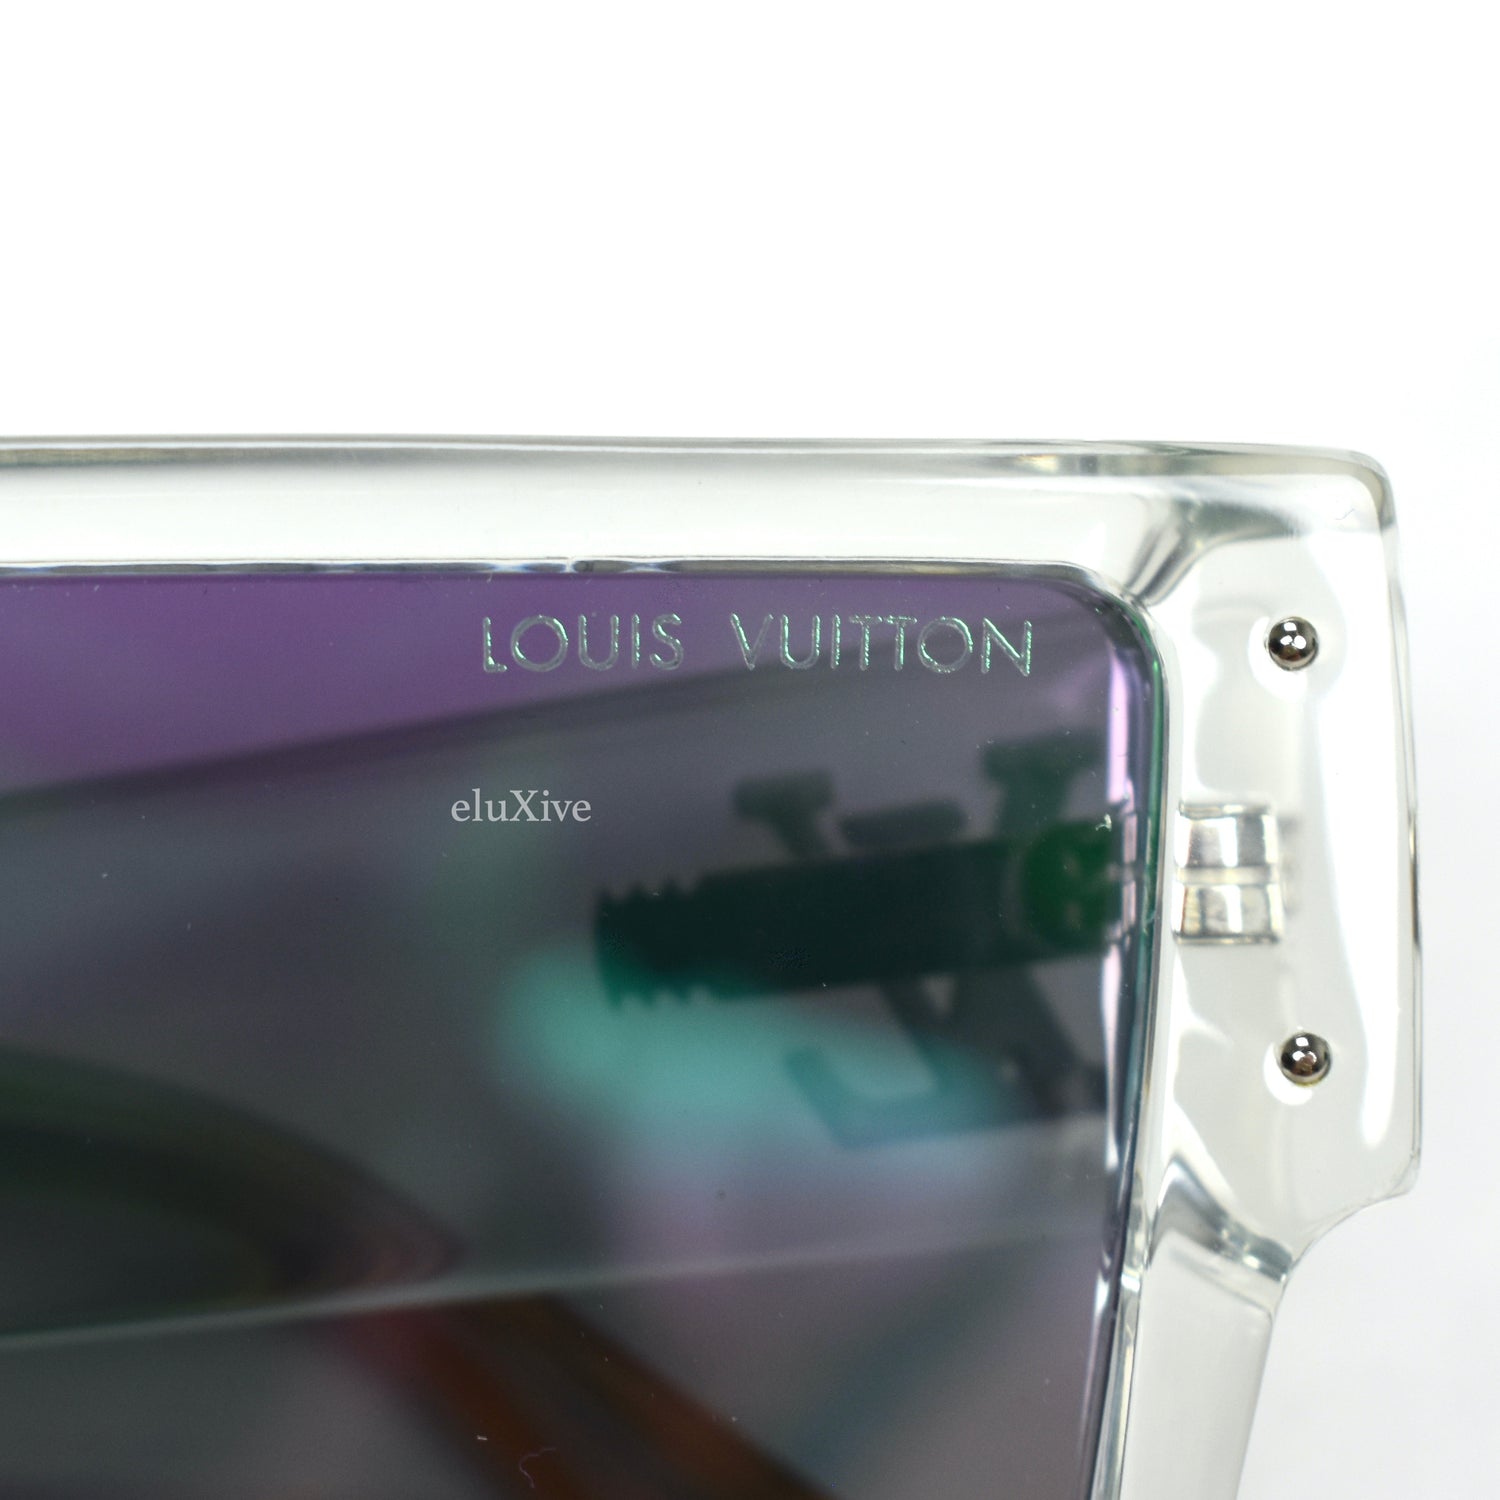 Louis Vuitton releases a new collection of men's sunglasses – Louis Vuitton  Rainbow - The Glass Magazine